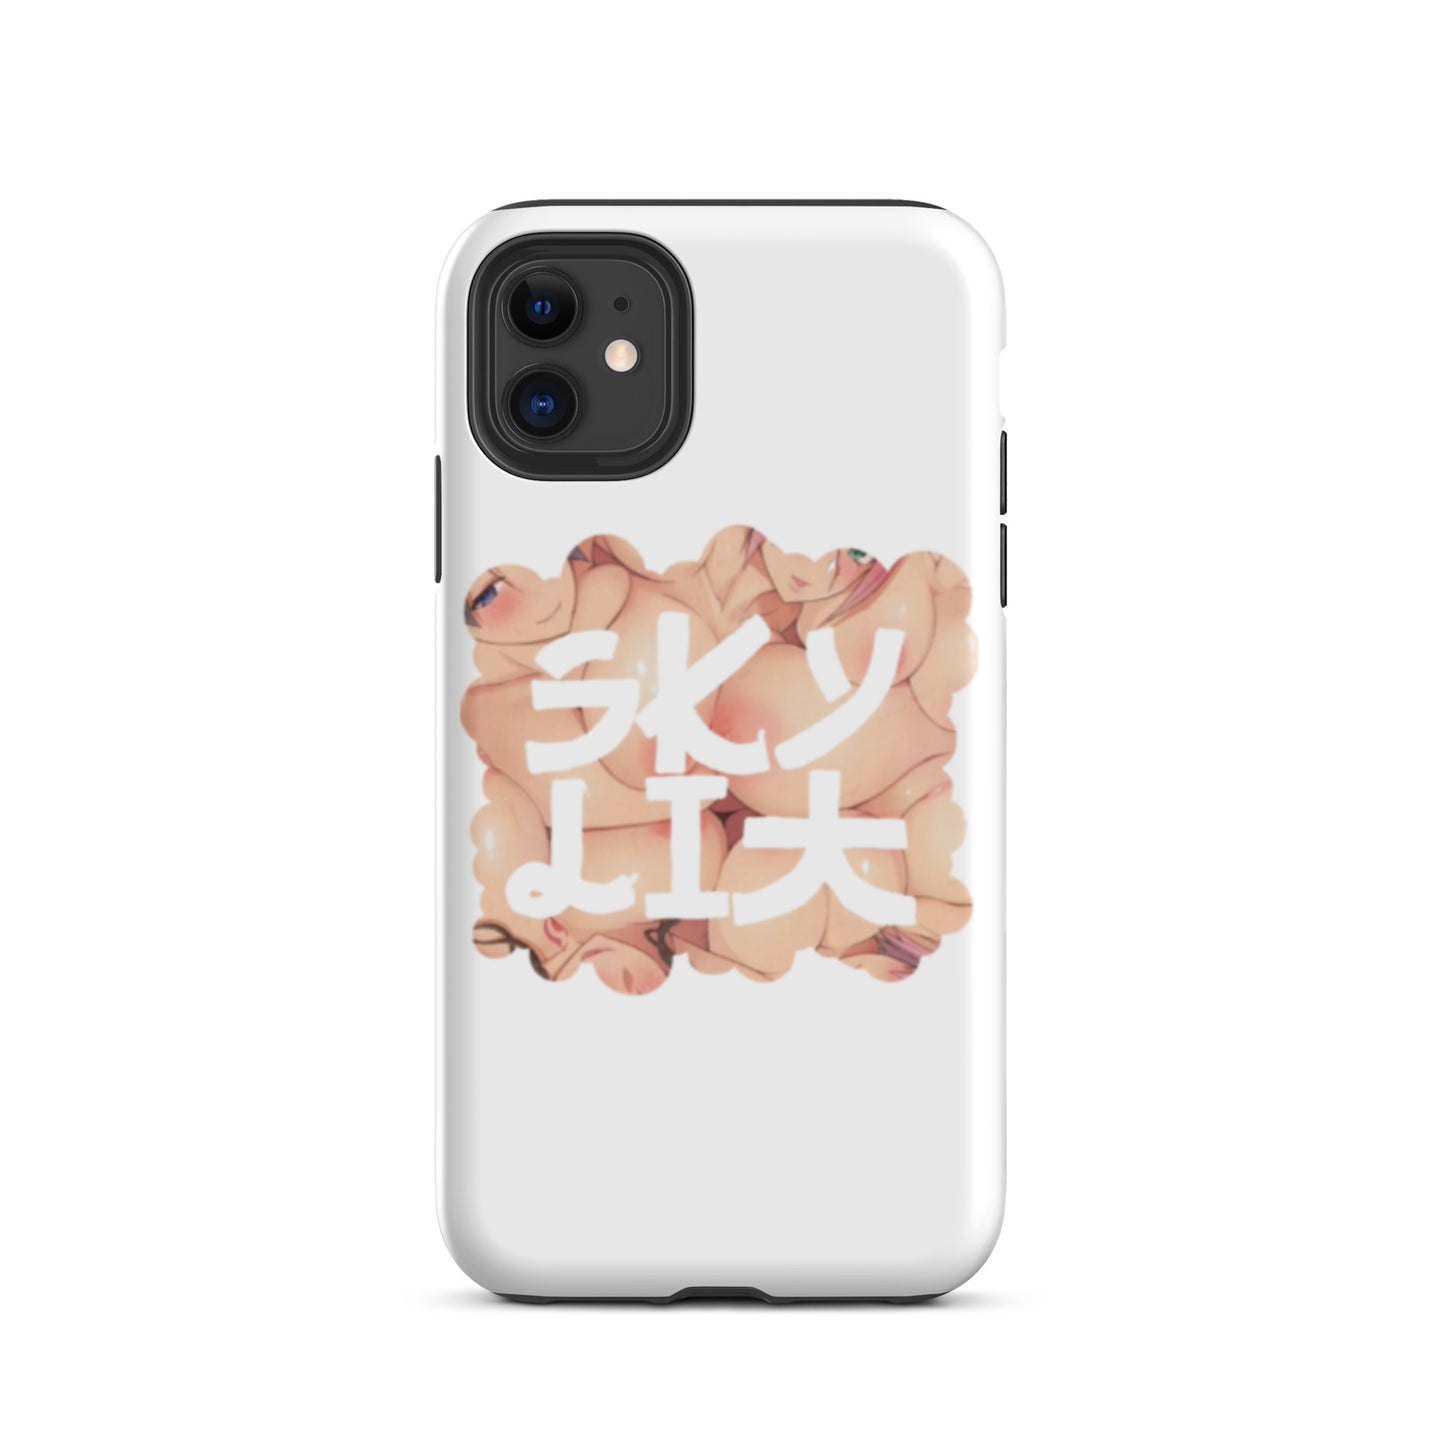 Skylit Anime Tough iPhone case